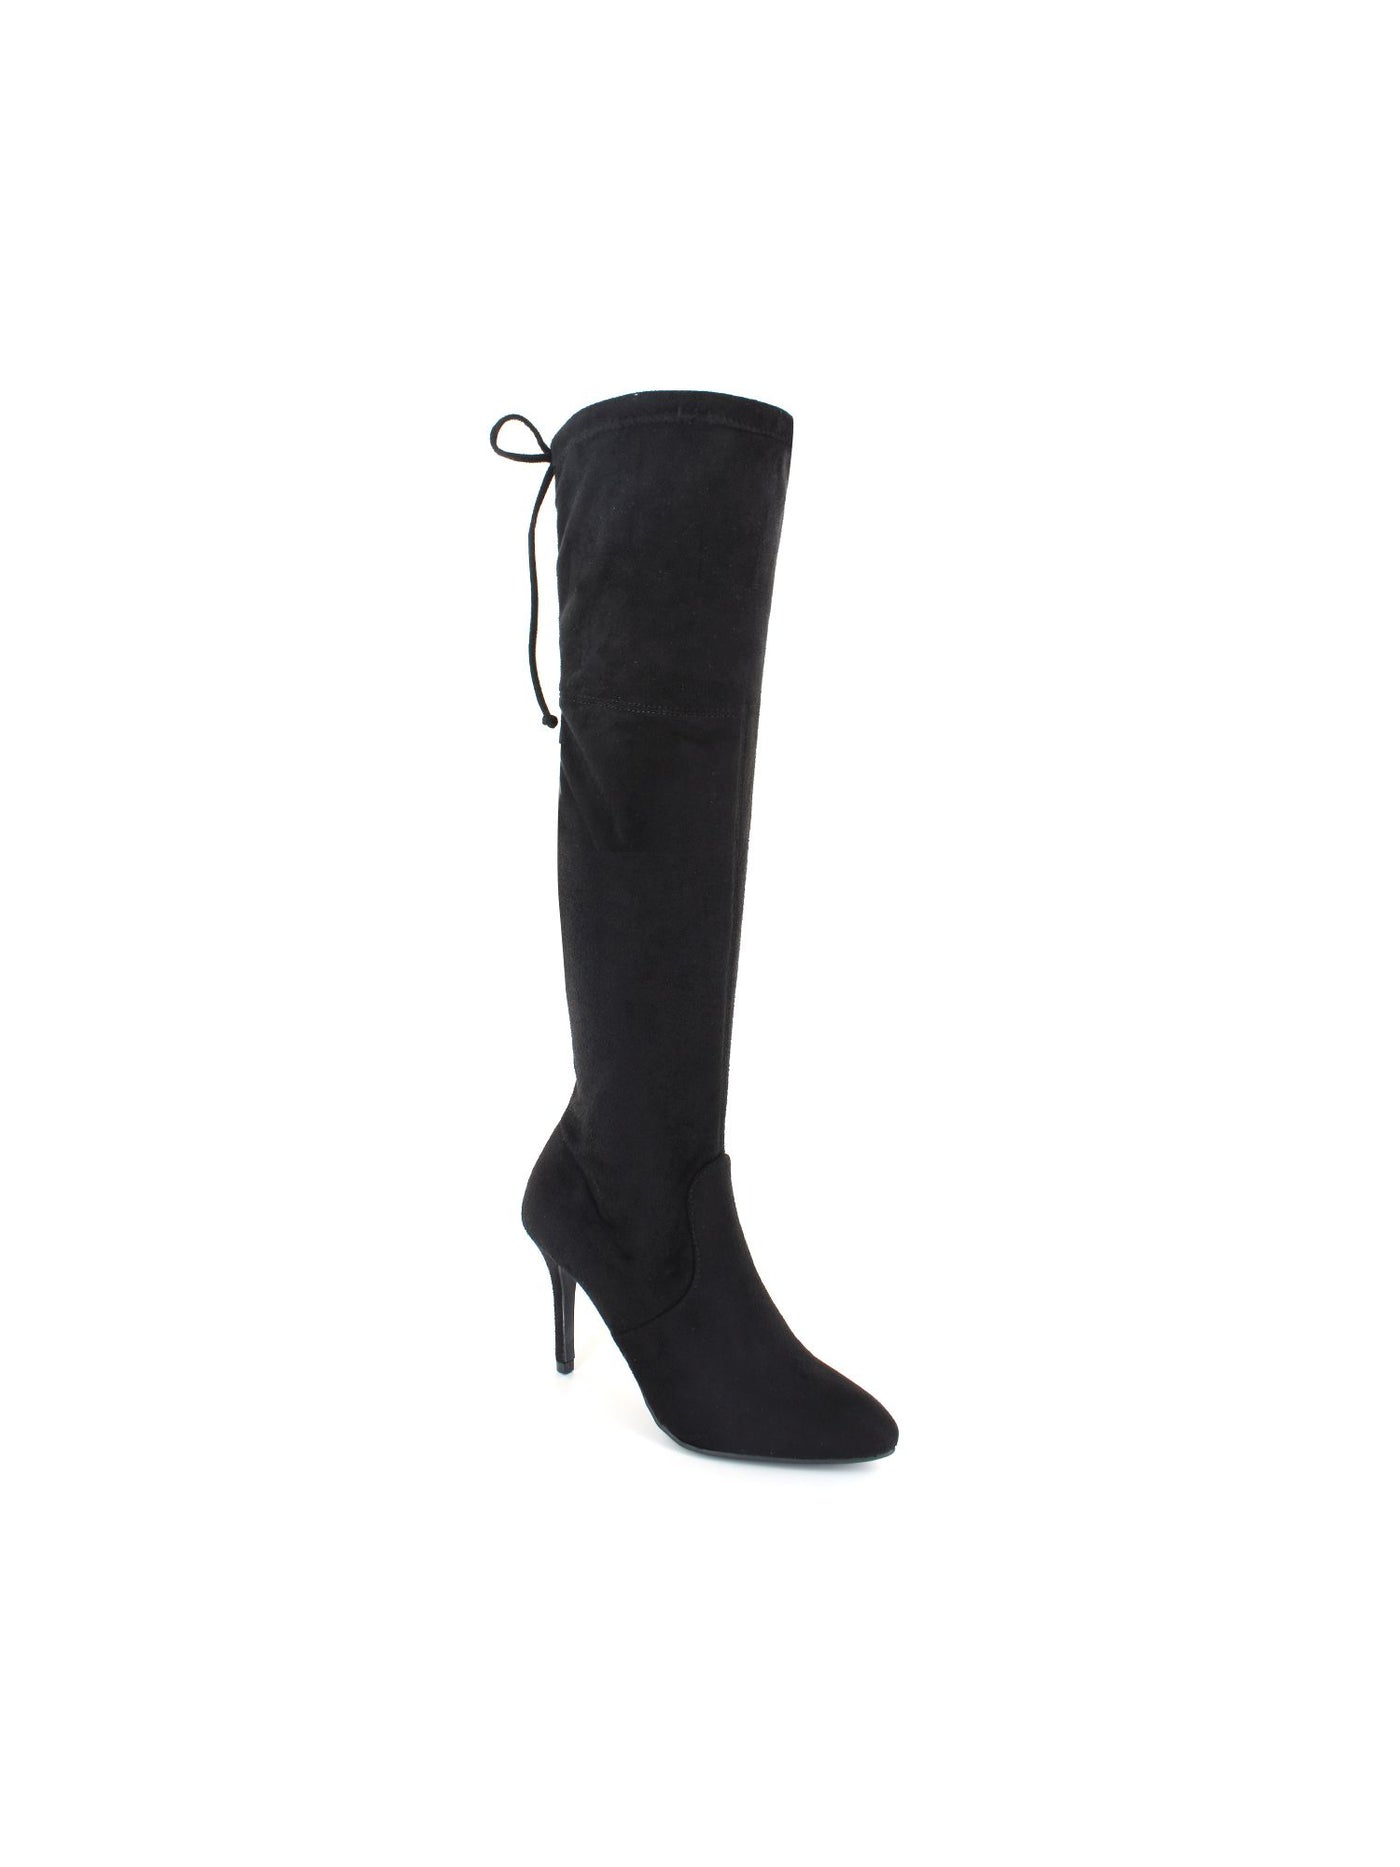 ZIGI SOHO Womens Black Tie Back Padded Silla Pointed Toe Stiletto Zip-Up Dress Boots 7.5